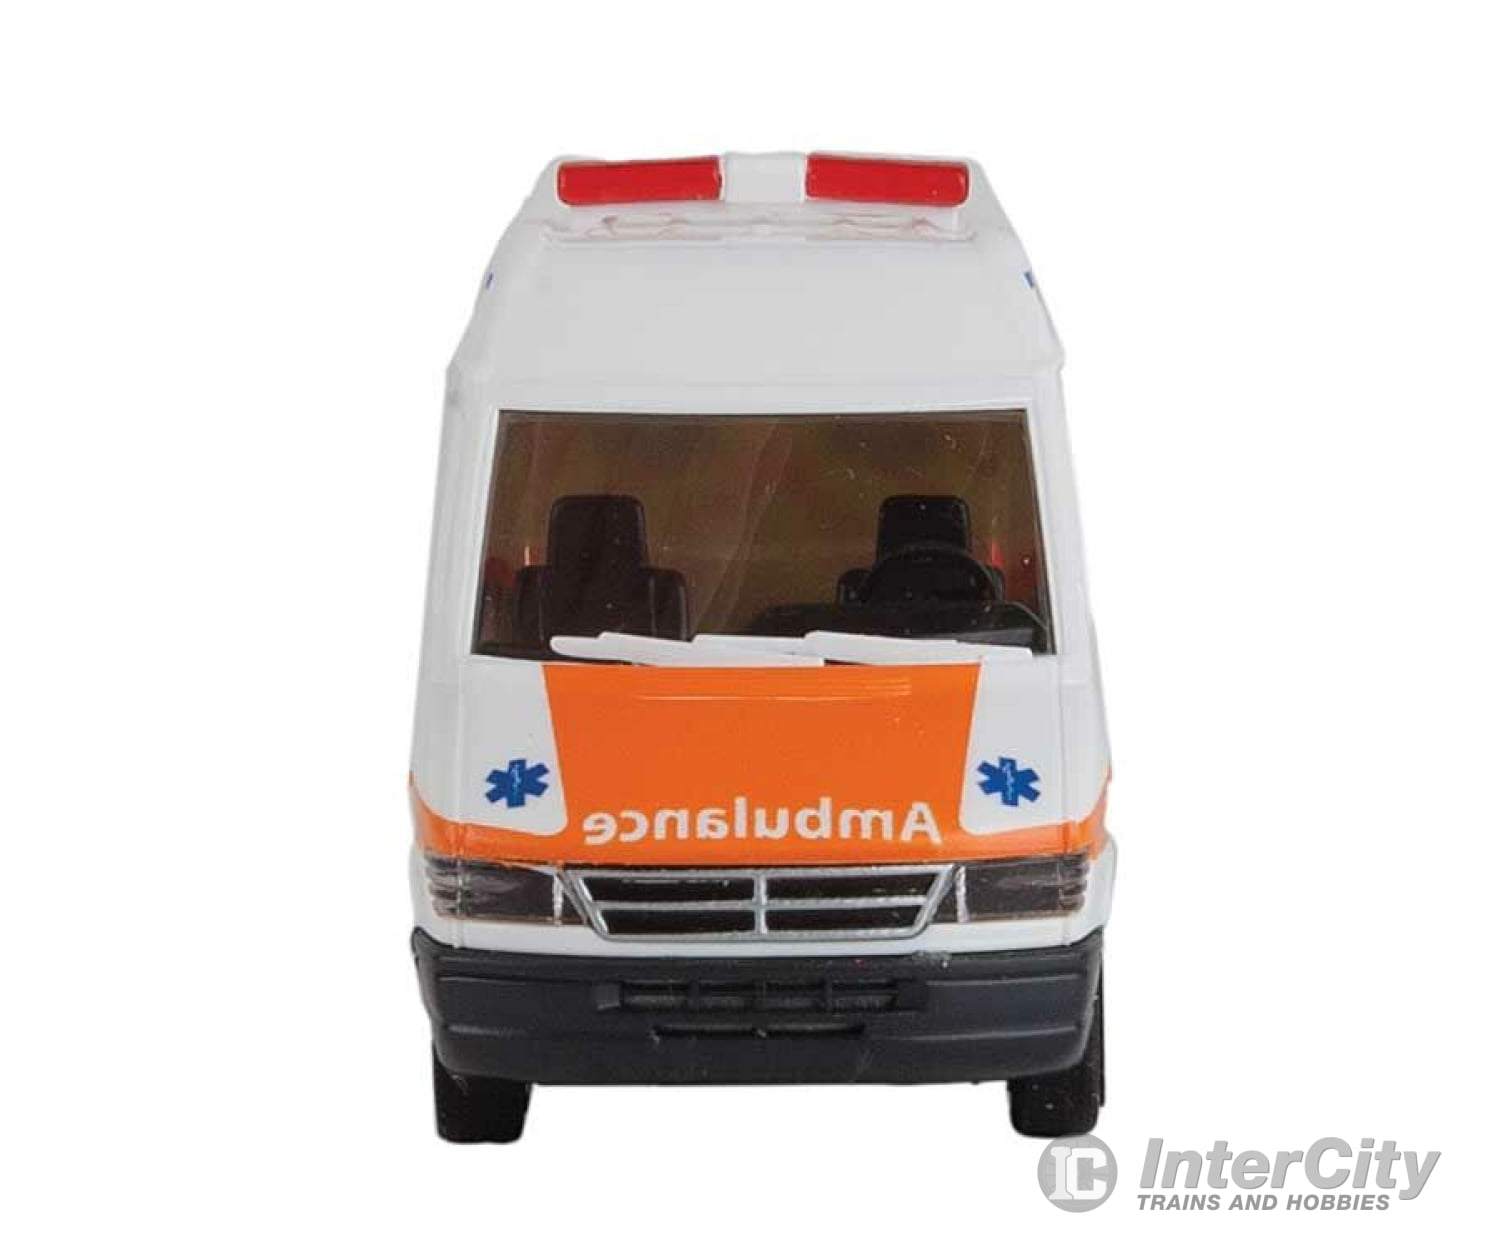 Walthers 12201 Service Van - Assembled -- Ambulance (White Orange Blue) Cars & Trucks